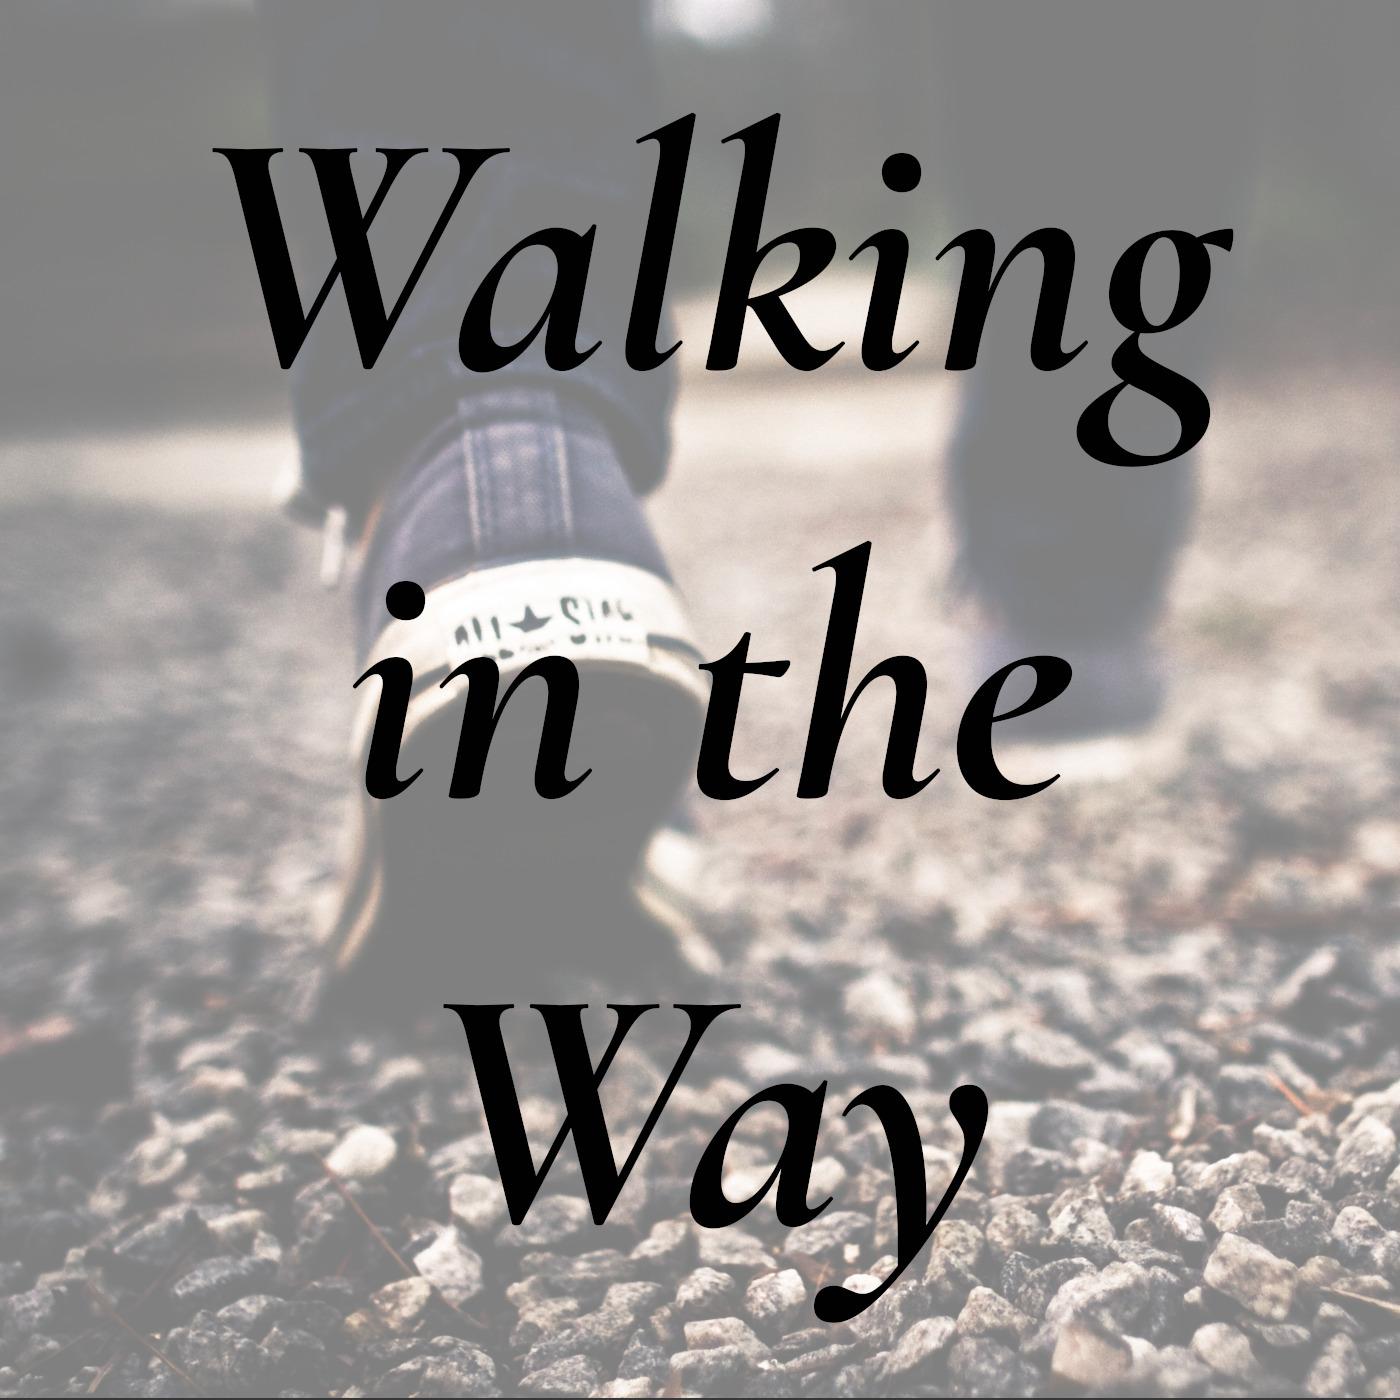 Walking in the Way